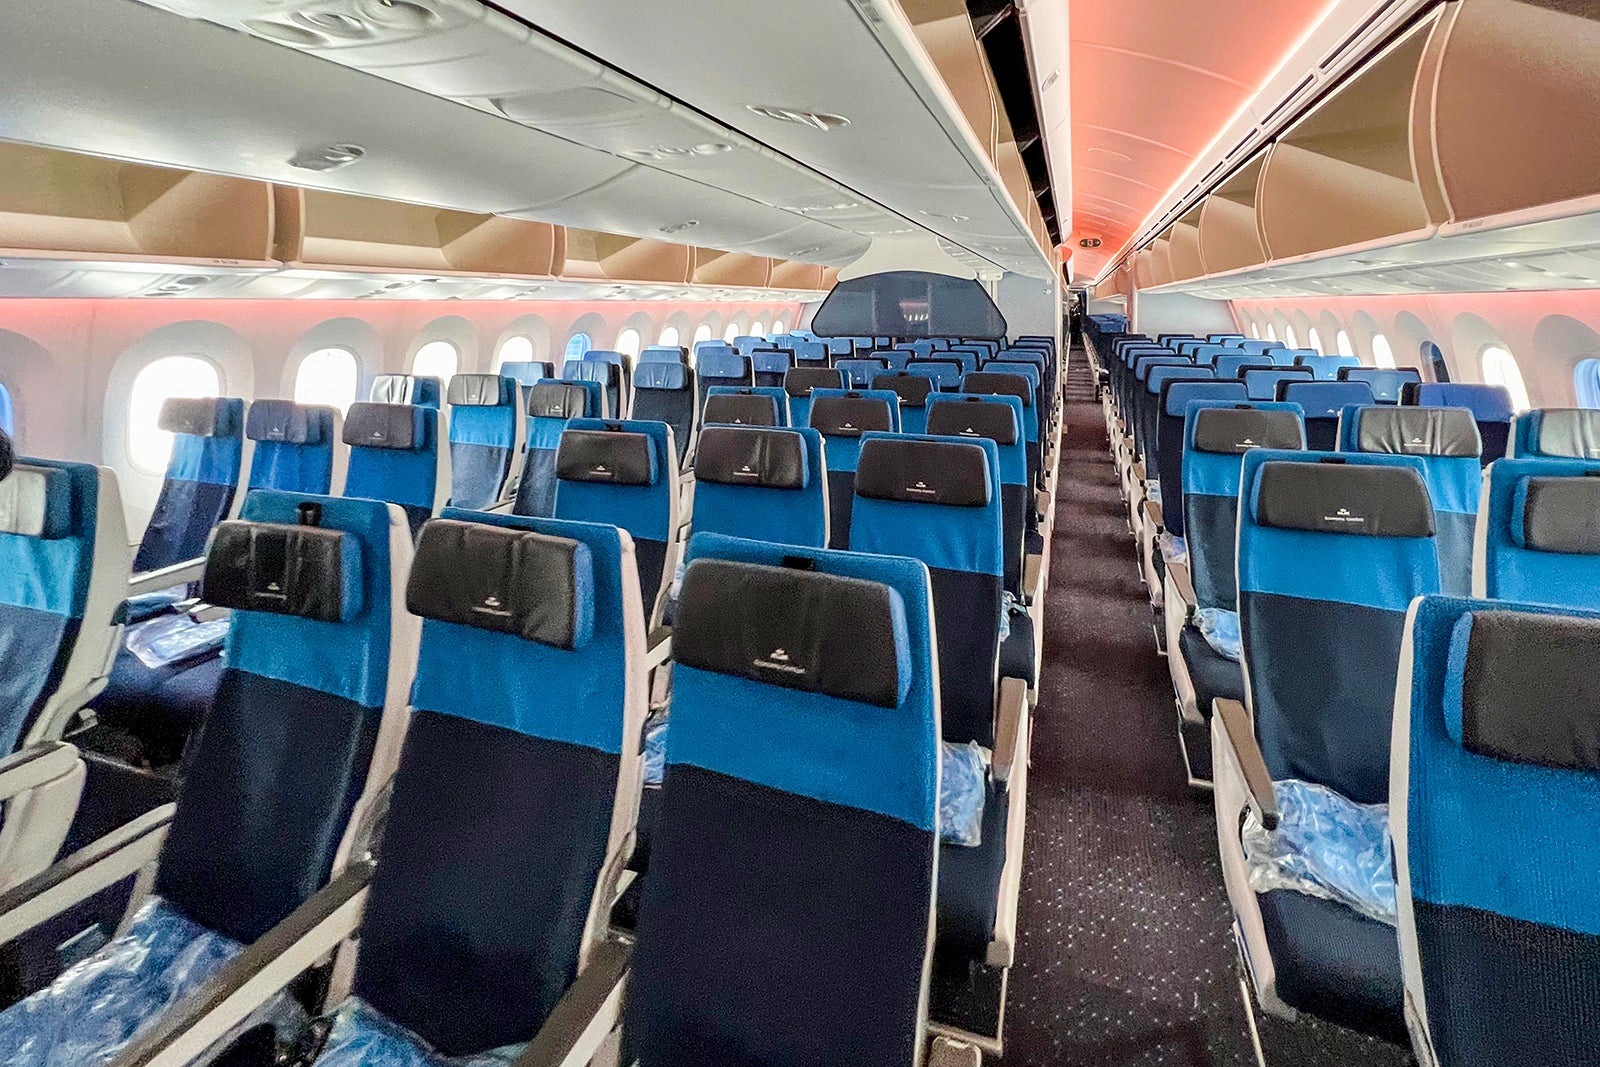 Air FranceKLM business class seats CHenderson 6